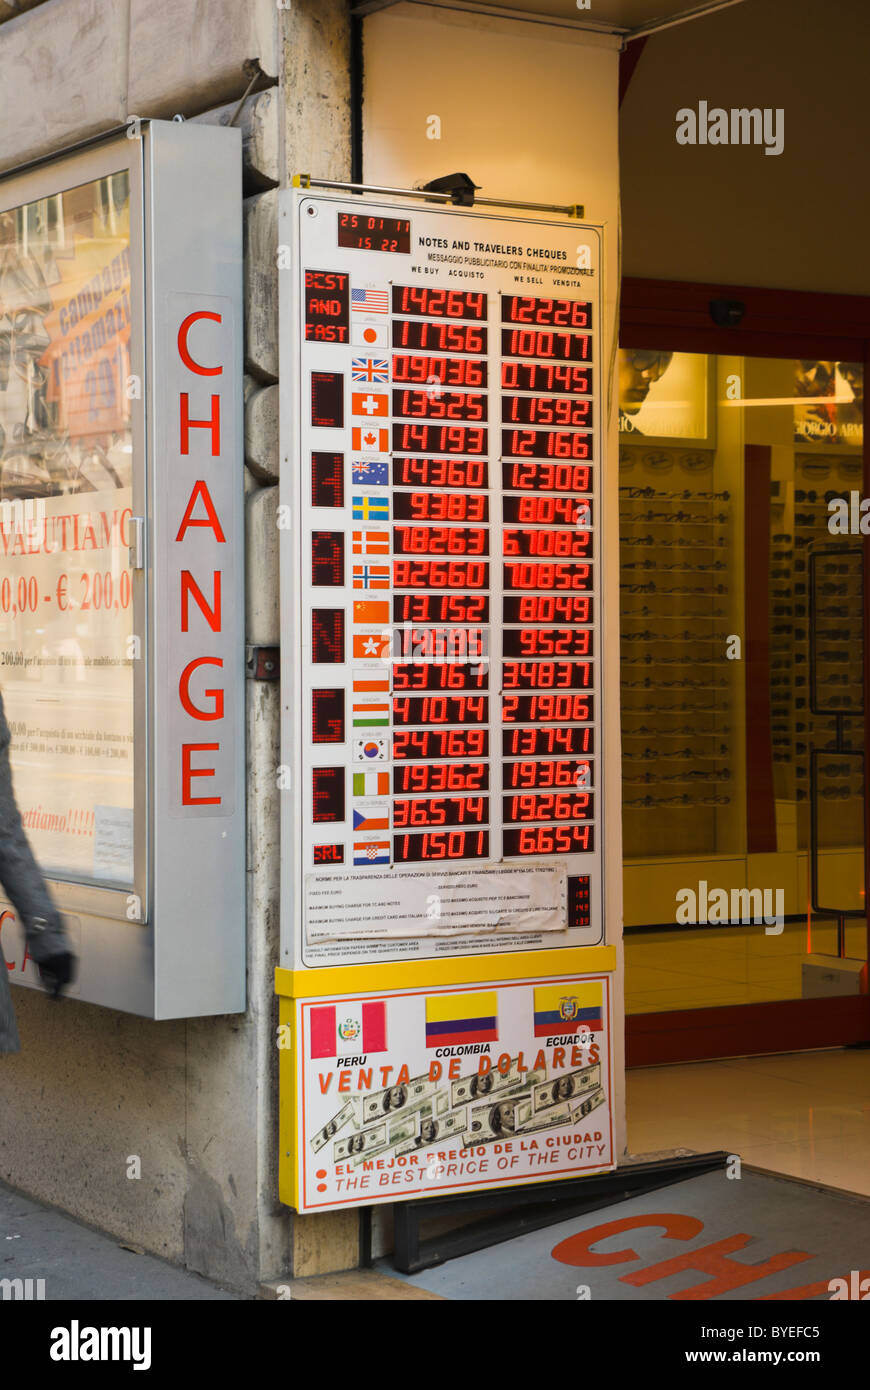 Bureau de change with conversion rates, Rome, Italy Stock Photo